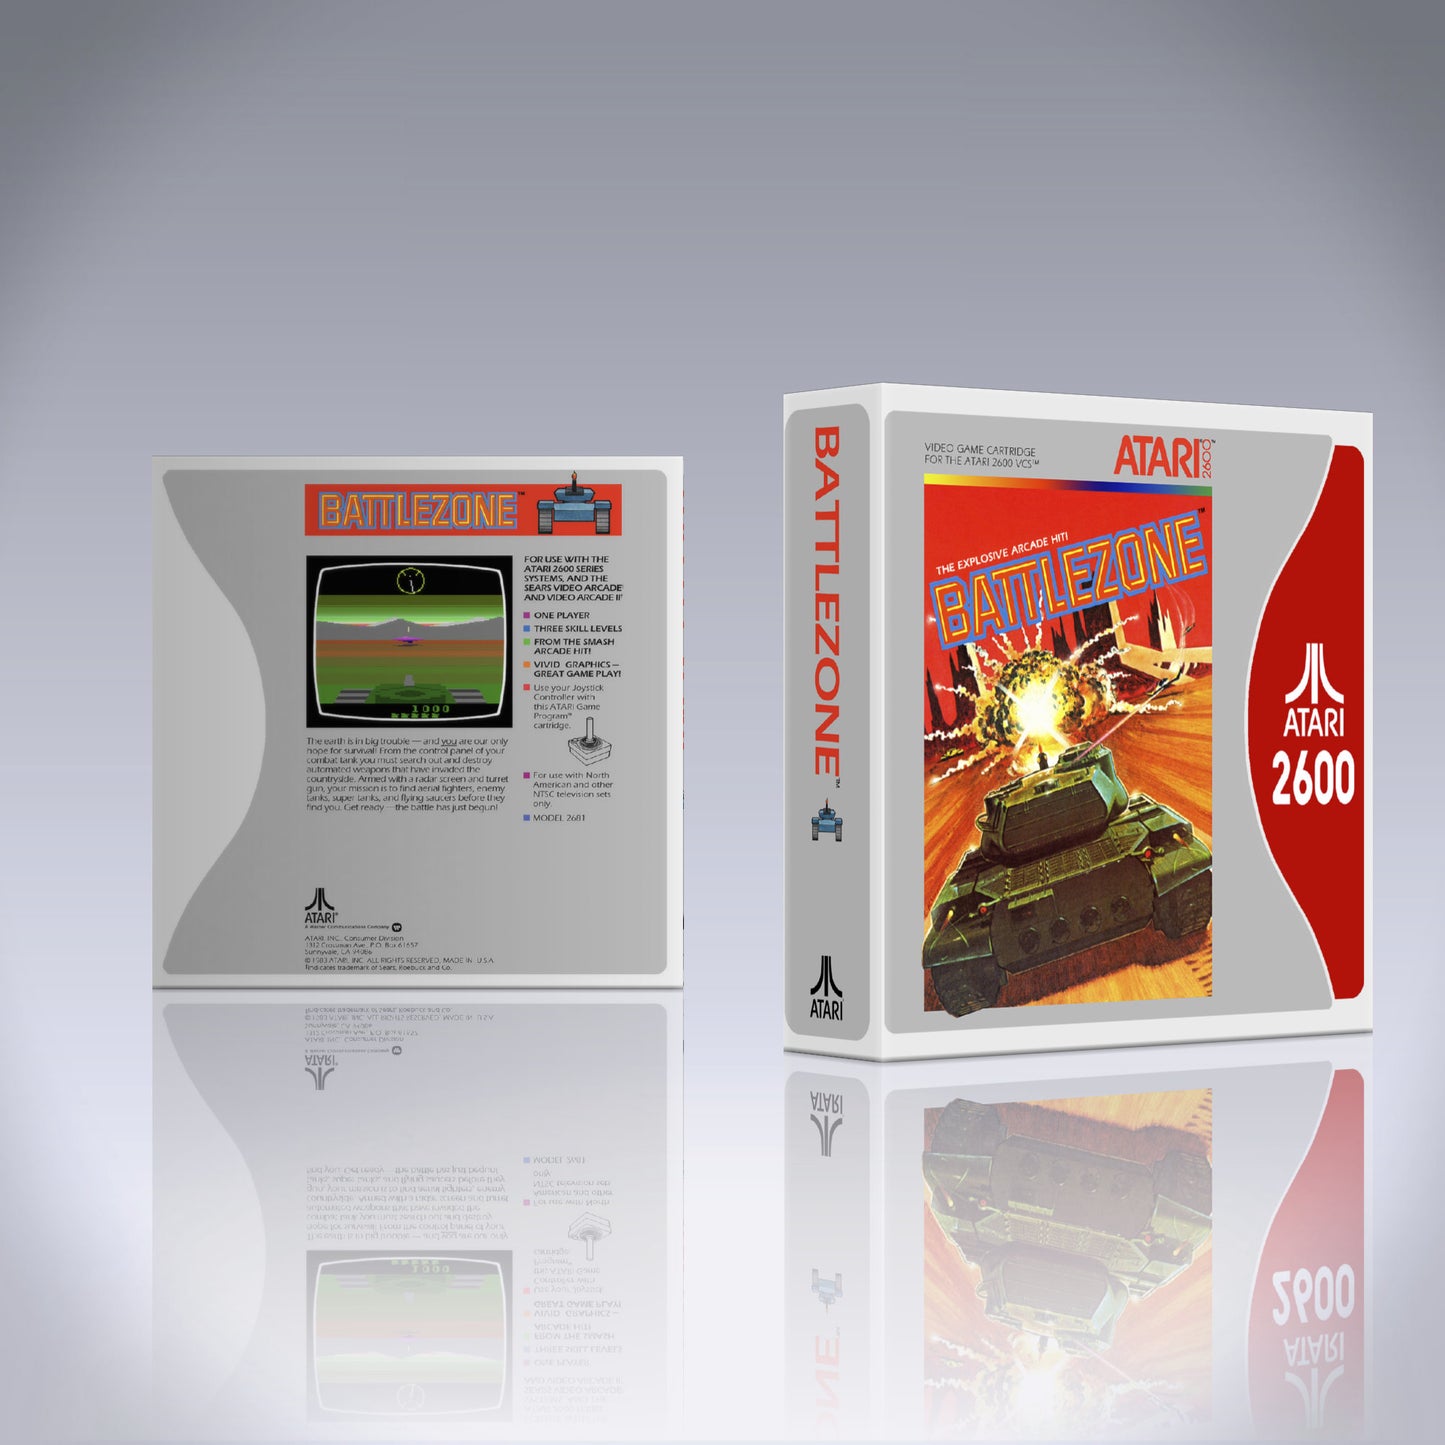 Atari 2600 Case - NO GAME - Battlezone